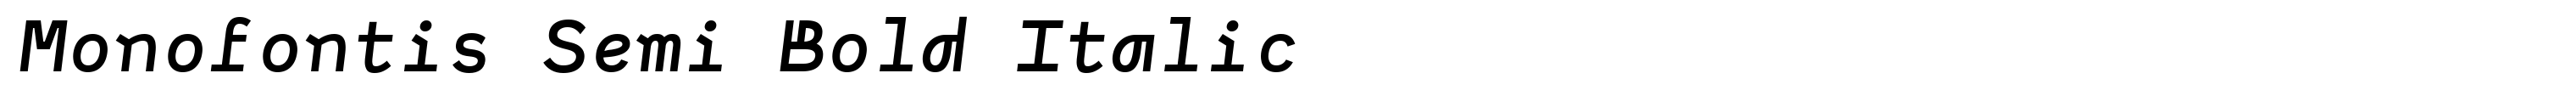 Monofontis Semi Bold Italic